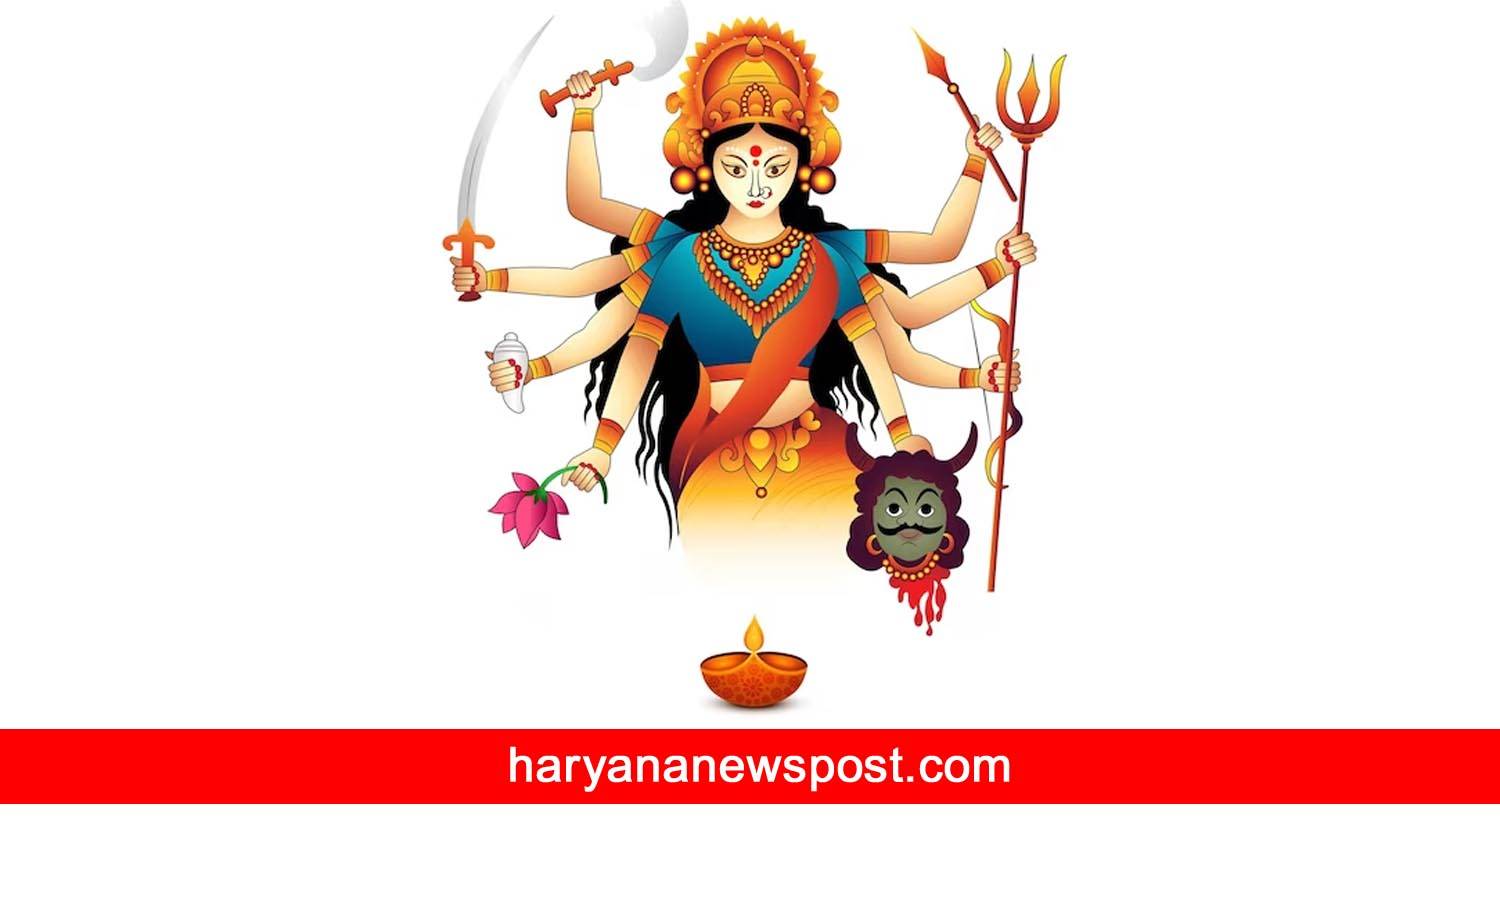 Advance Navratri Wishes in Hindi, English - Advance Happy Navratri Status Messages Images, Photo